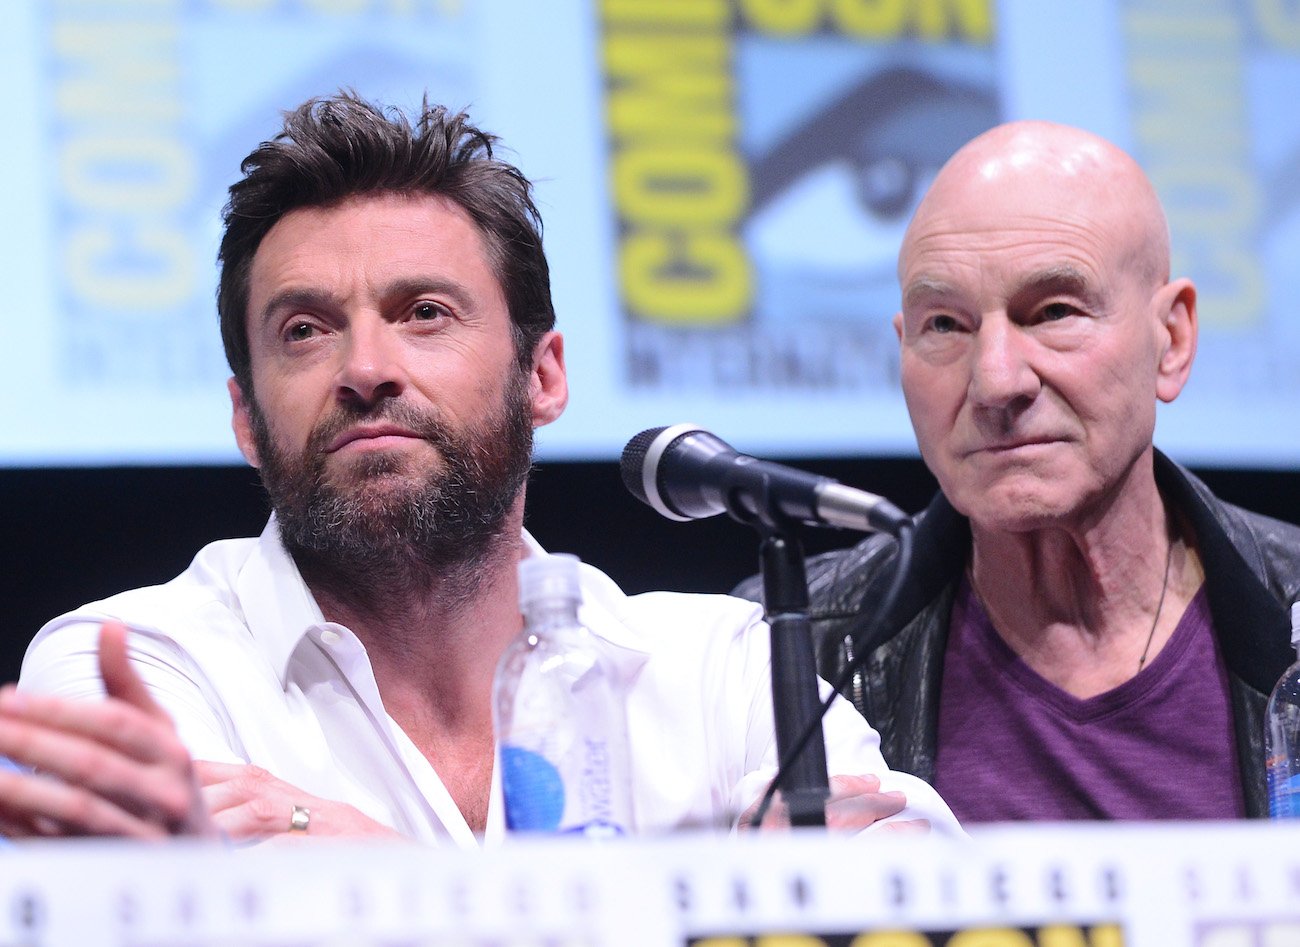 Hugh Jackman and Patrick Stewart sitting at Comic-Con